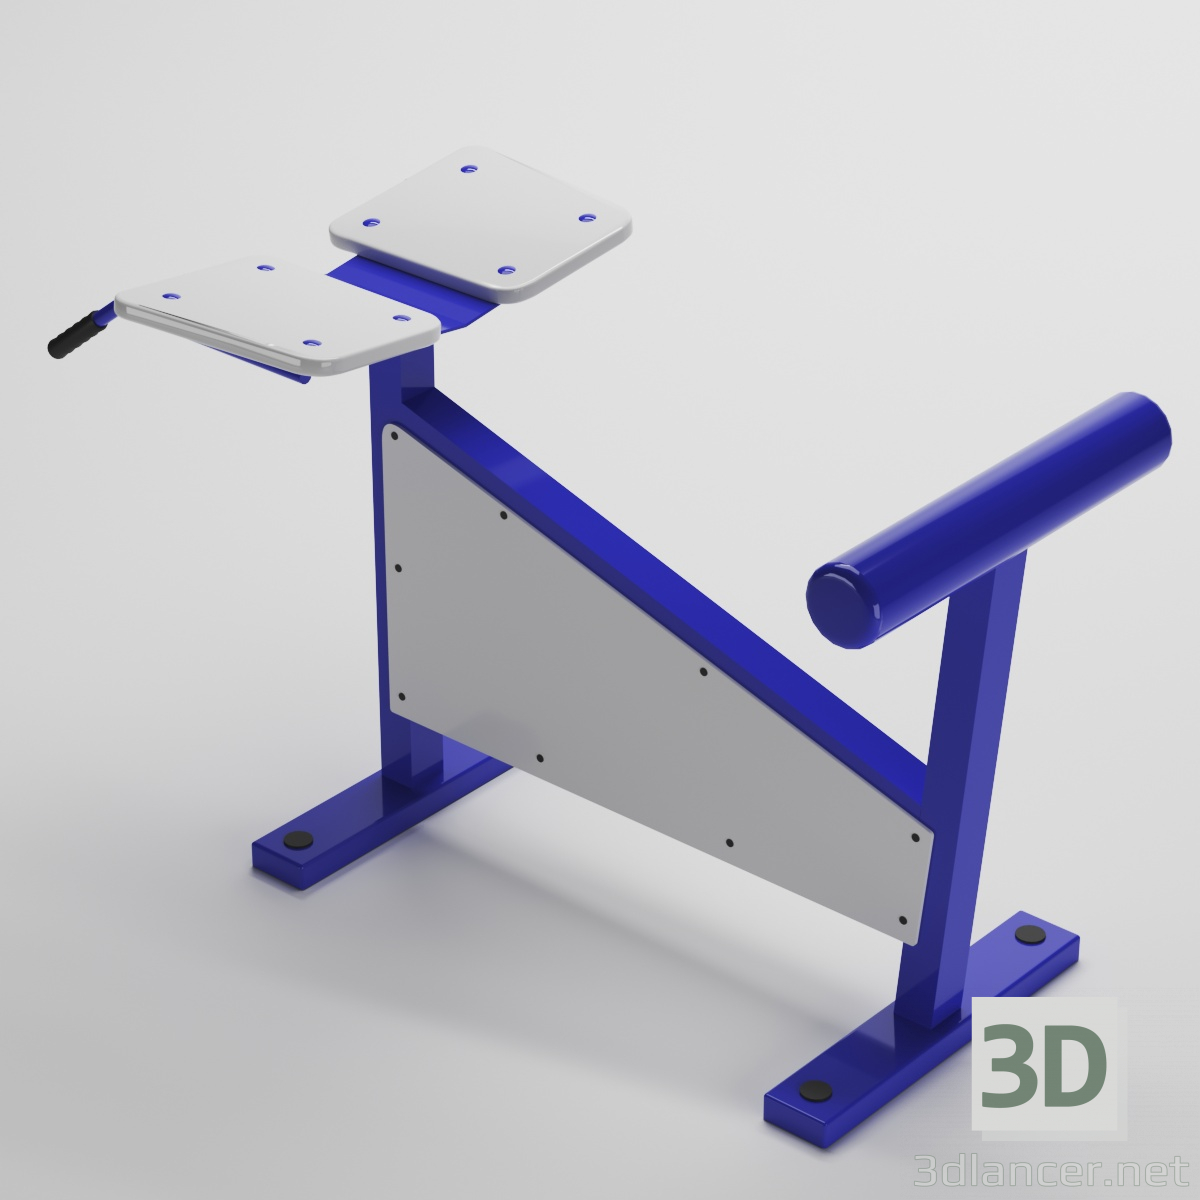 3d Street exercise machine "Hyperextension" model buy - render